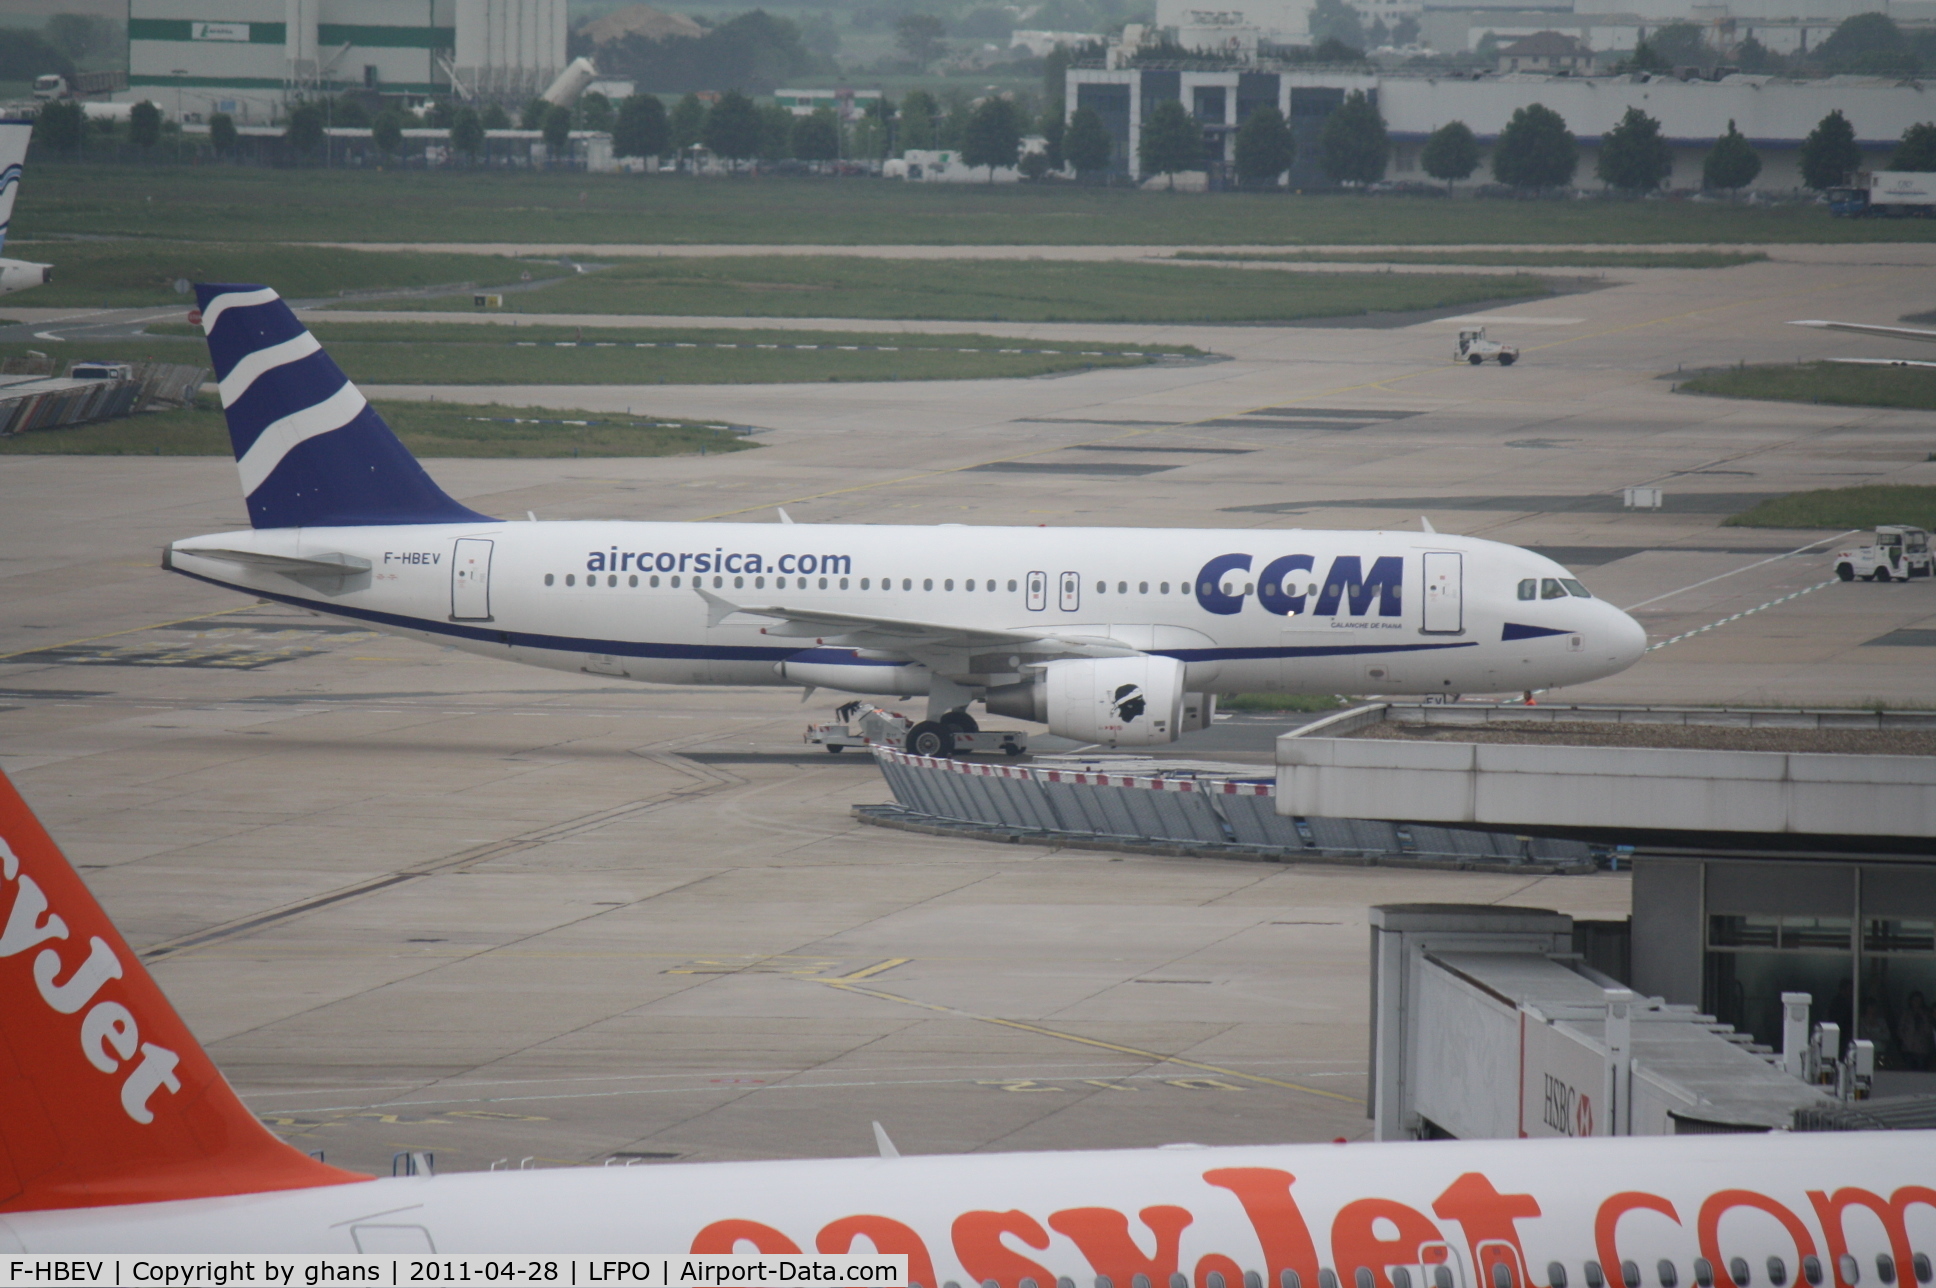 F-HBEV, 2009 Airbus A320-214 C/N 3952, Ccm renamed to Air Corsica